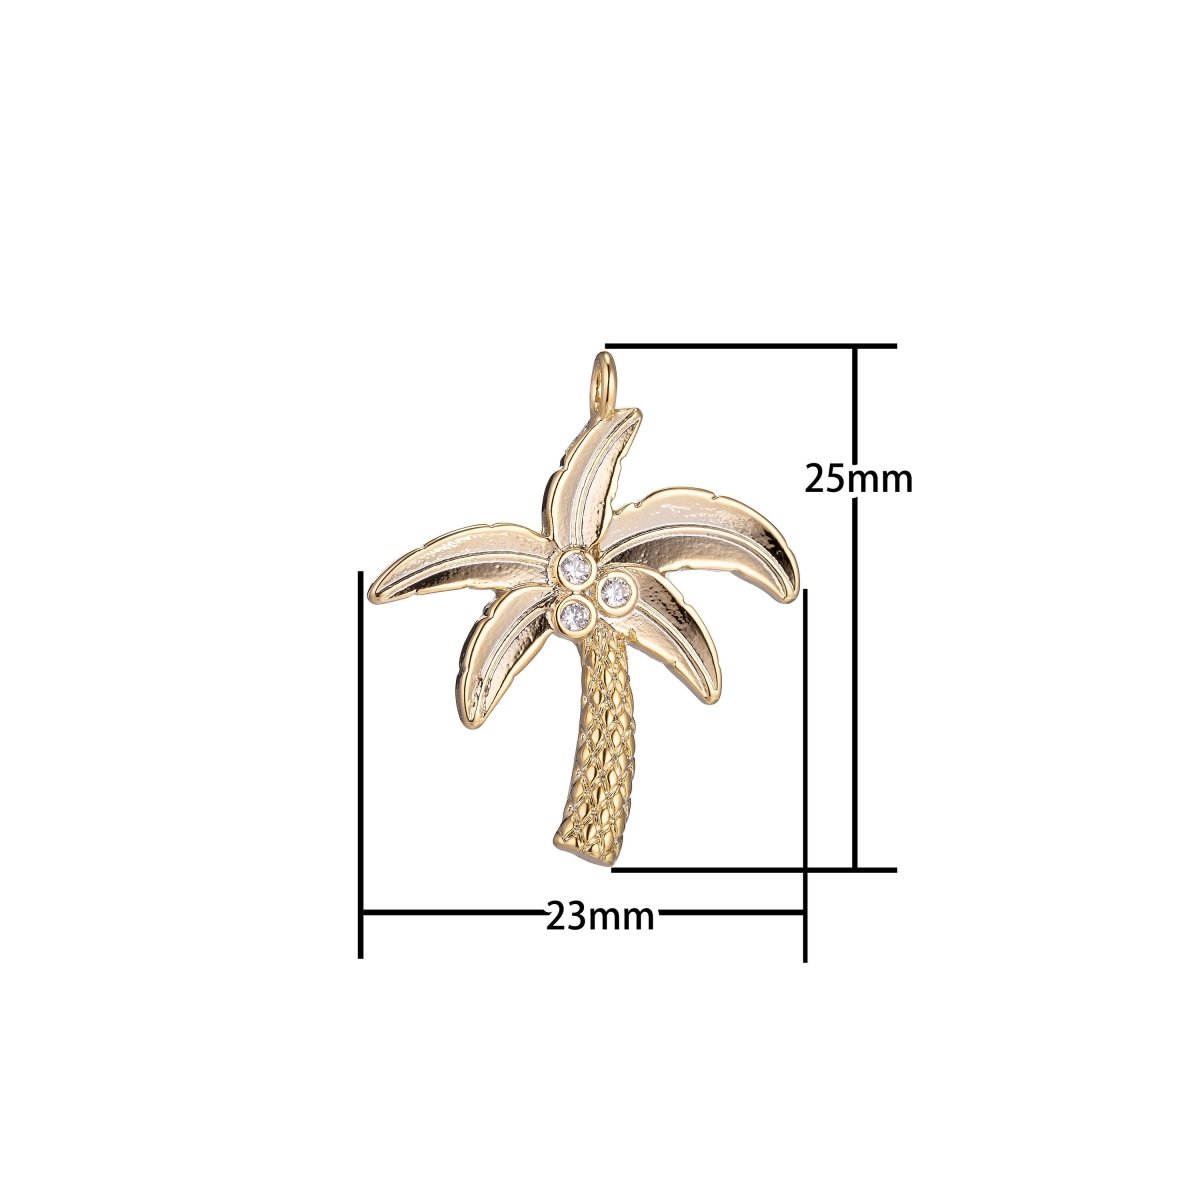 Dainty 18k Gold Filled Palm Tree Charm Tiny Coconut Tree Charm in CZ Charm for Bracelet Necklace Earring MakingC-348 - DLUXCA